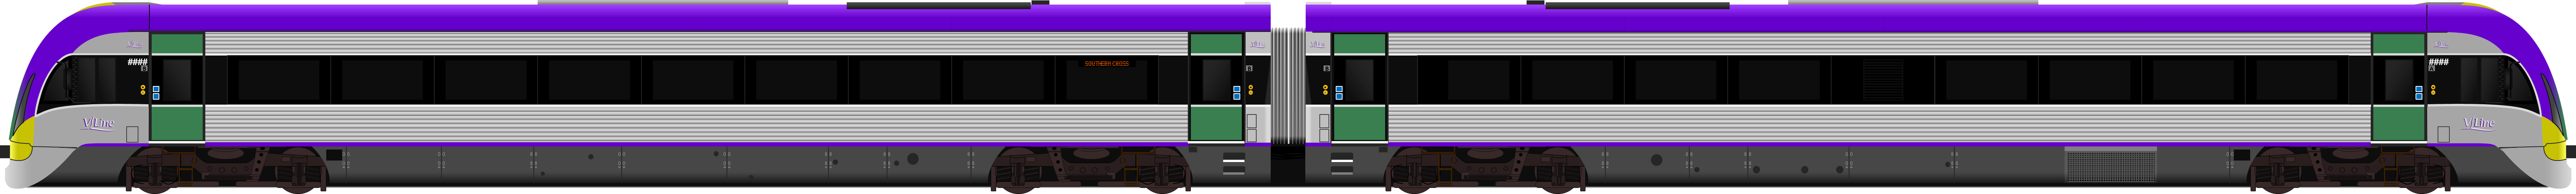 Vlocity 2 Carriage (Purple & Green)